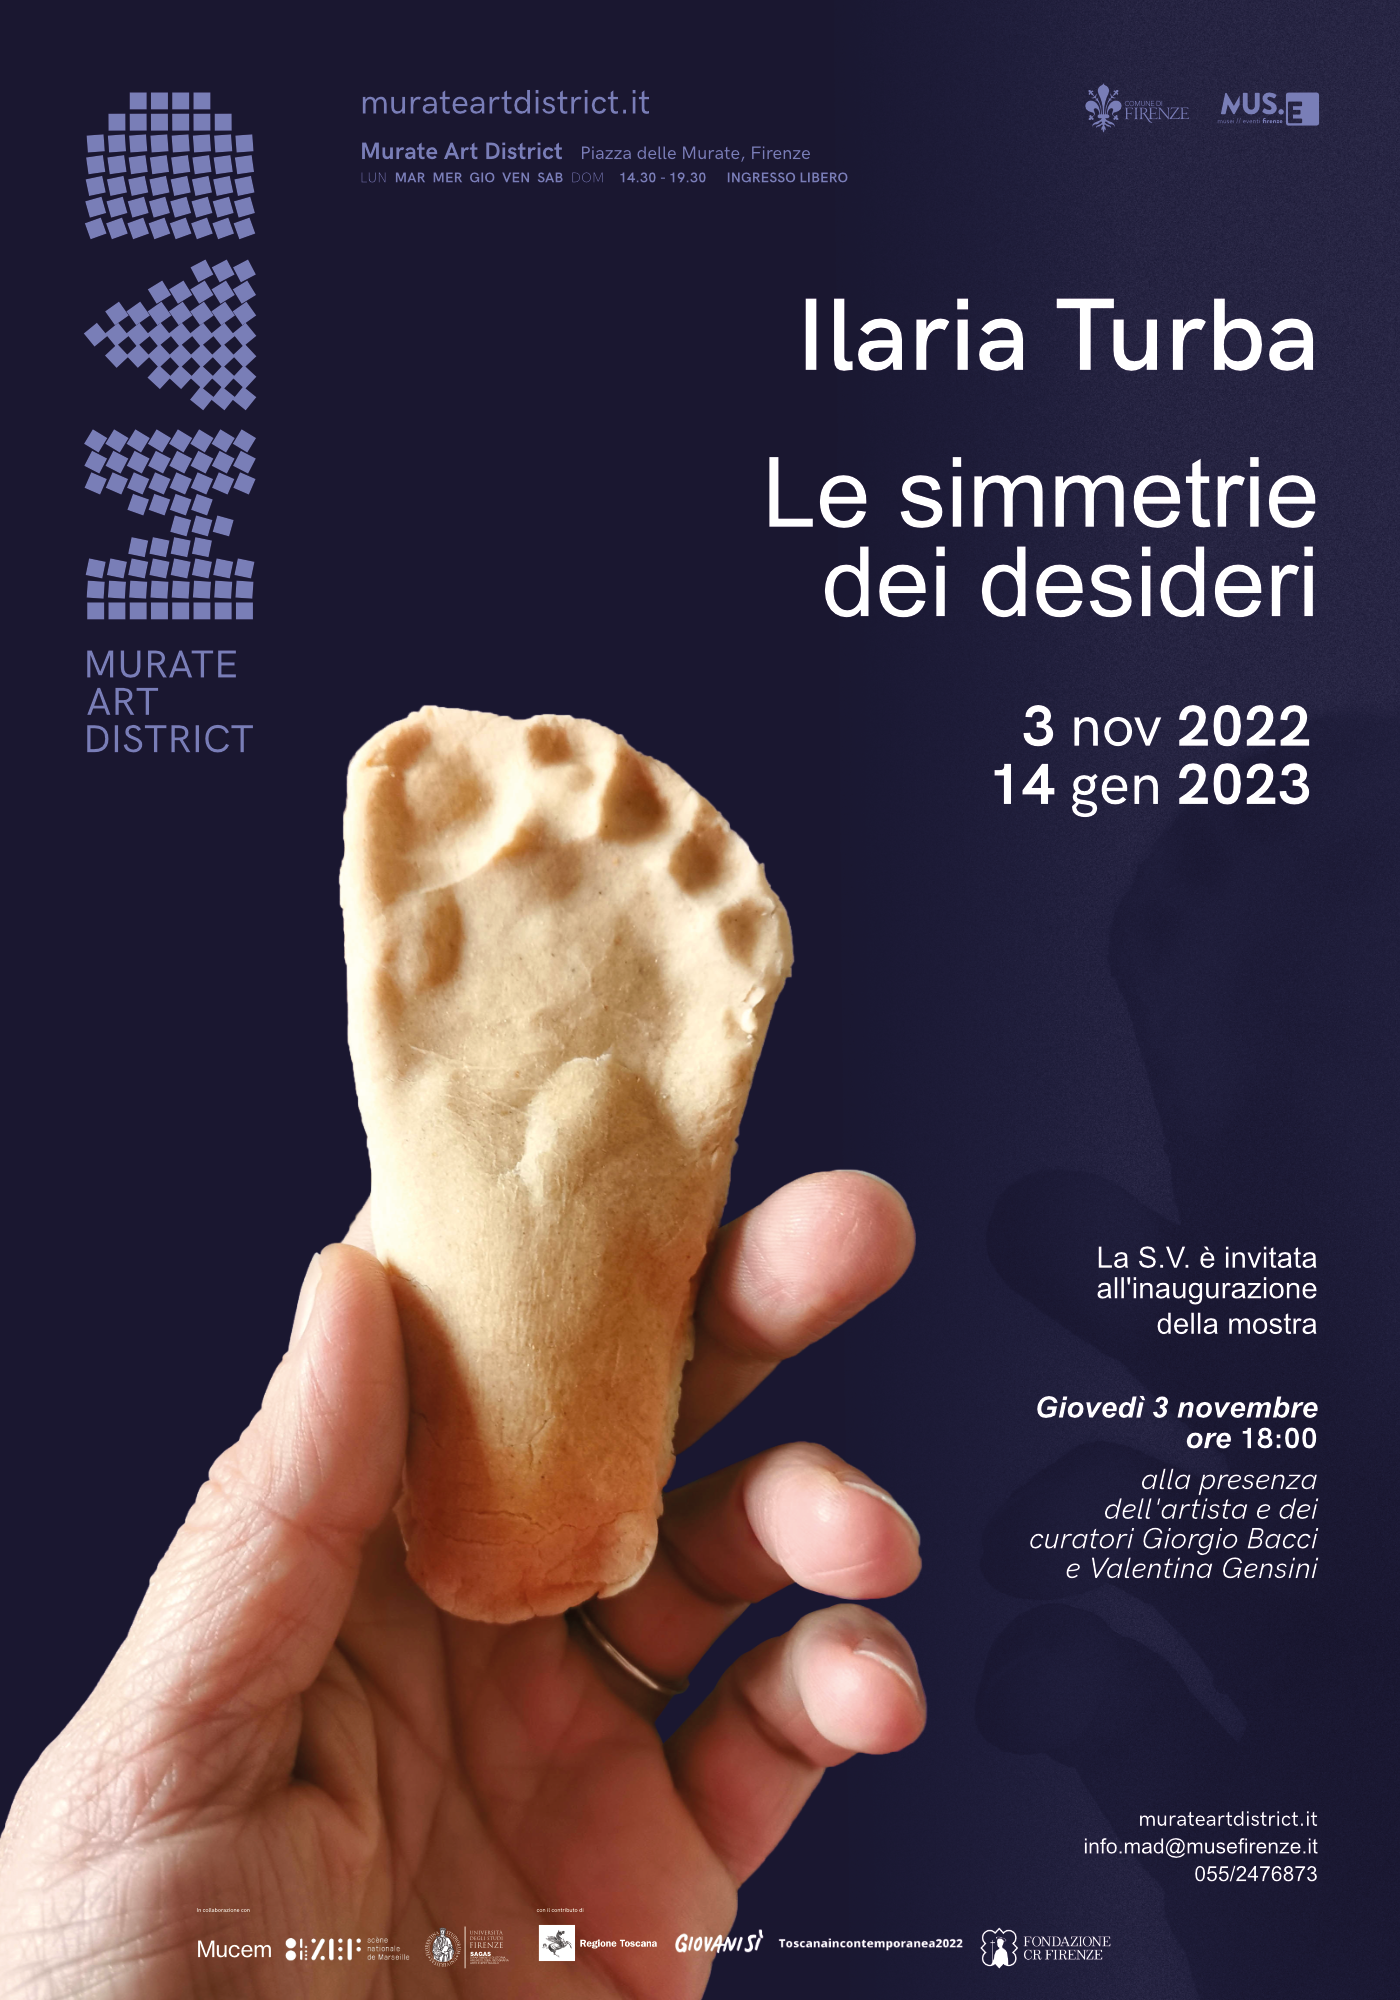 Ilaria Turba - Le simmetrie dei desideri